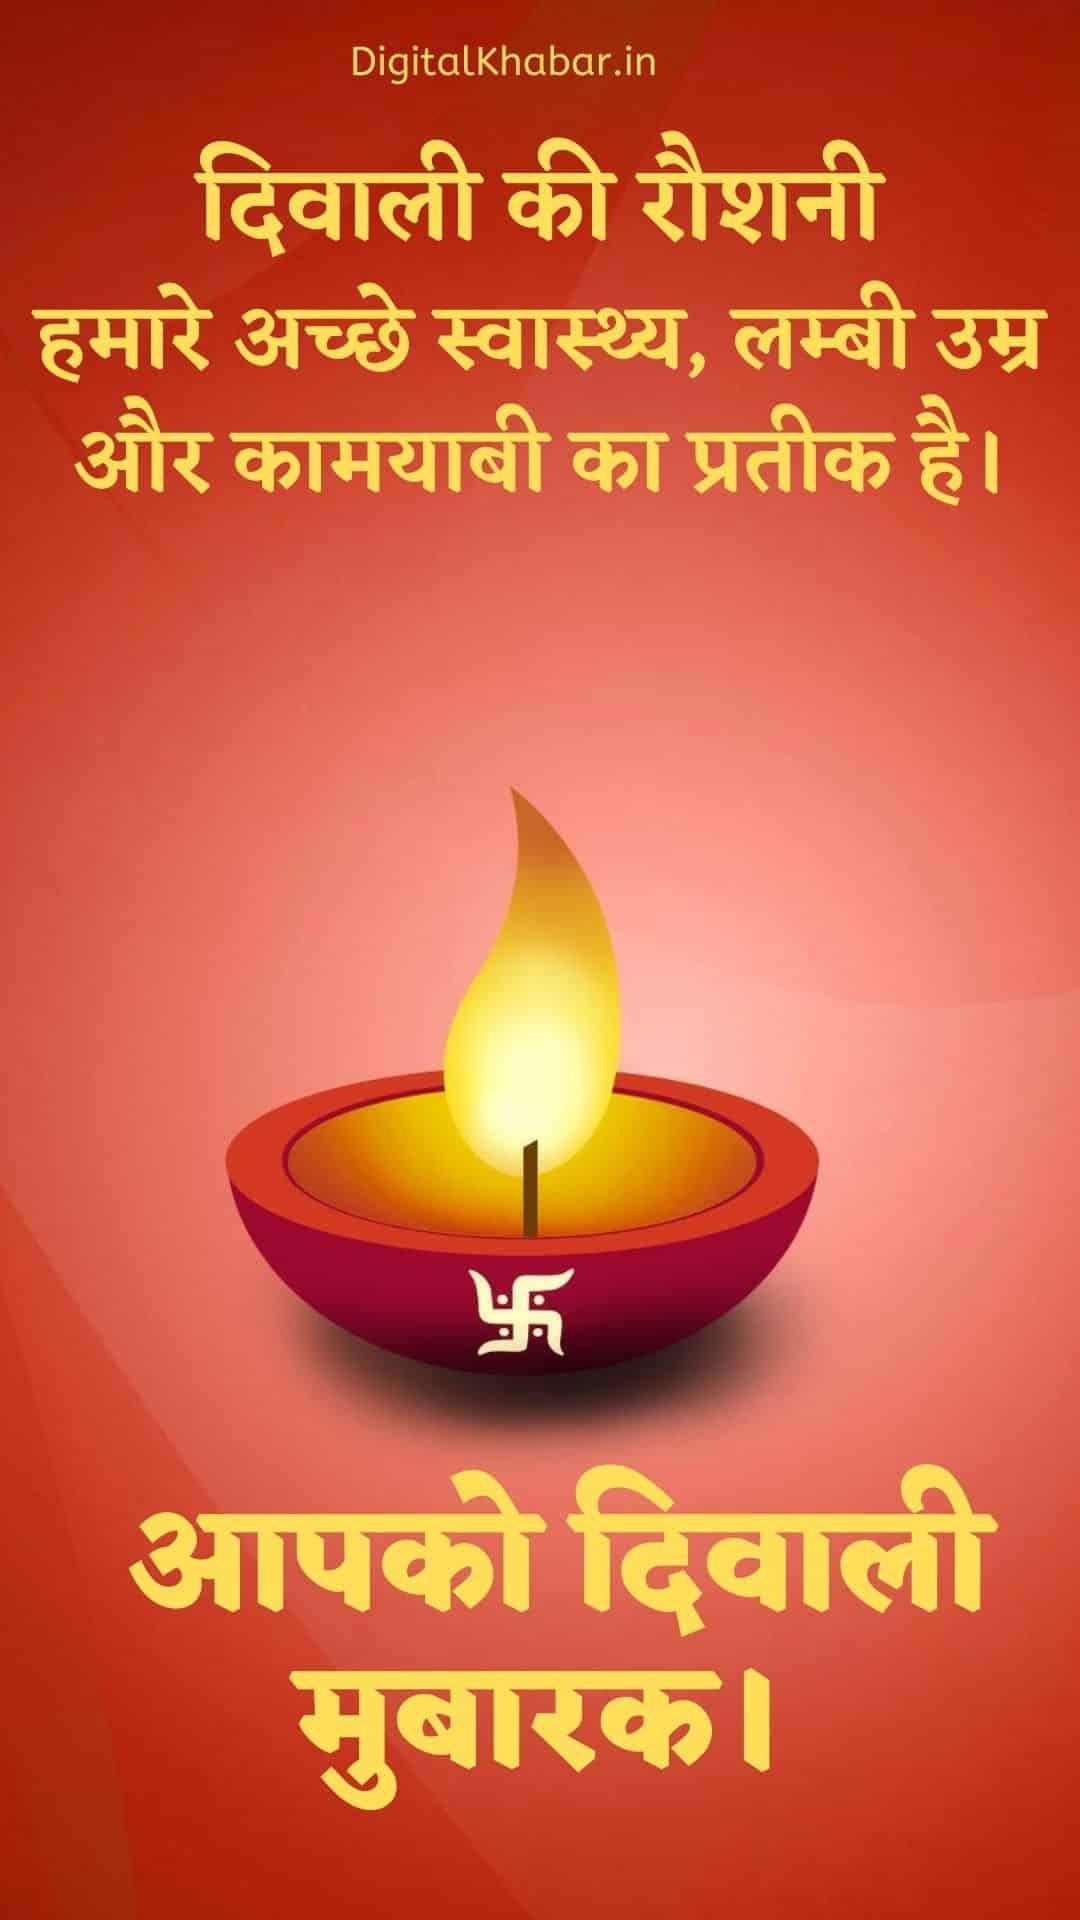 Deepawali Best wishes in Hindi